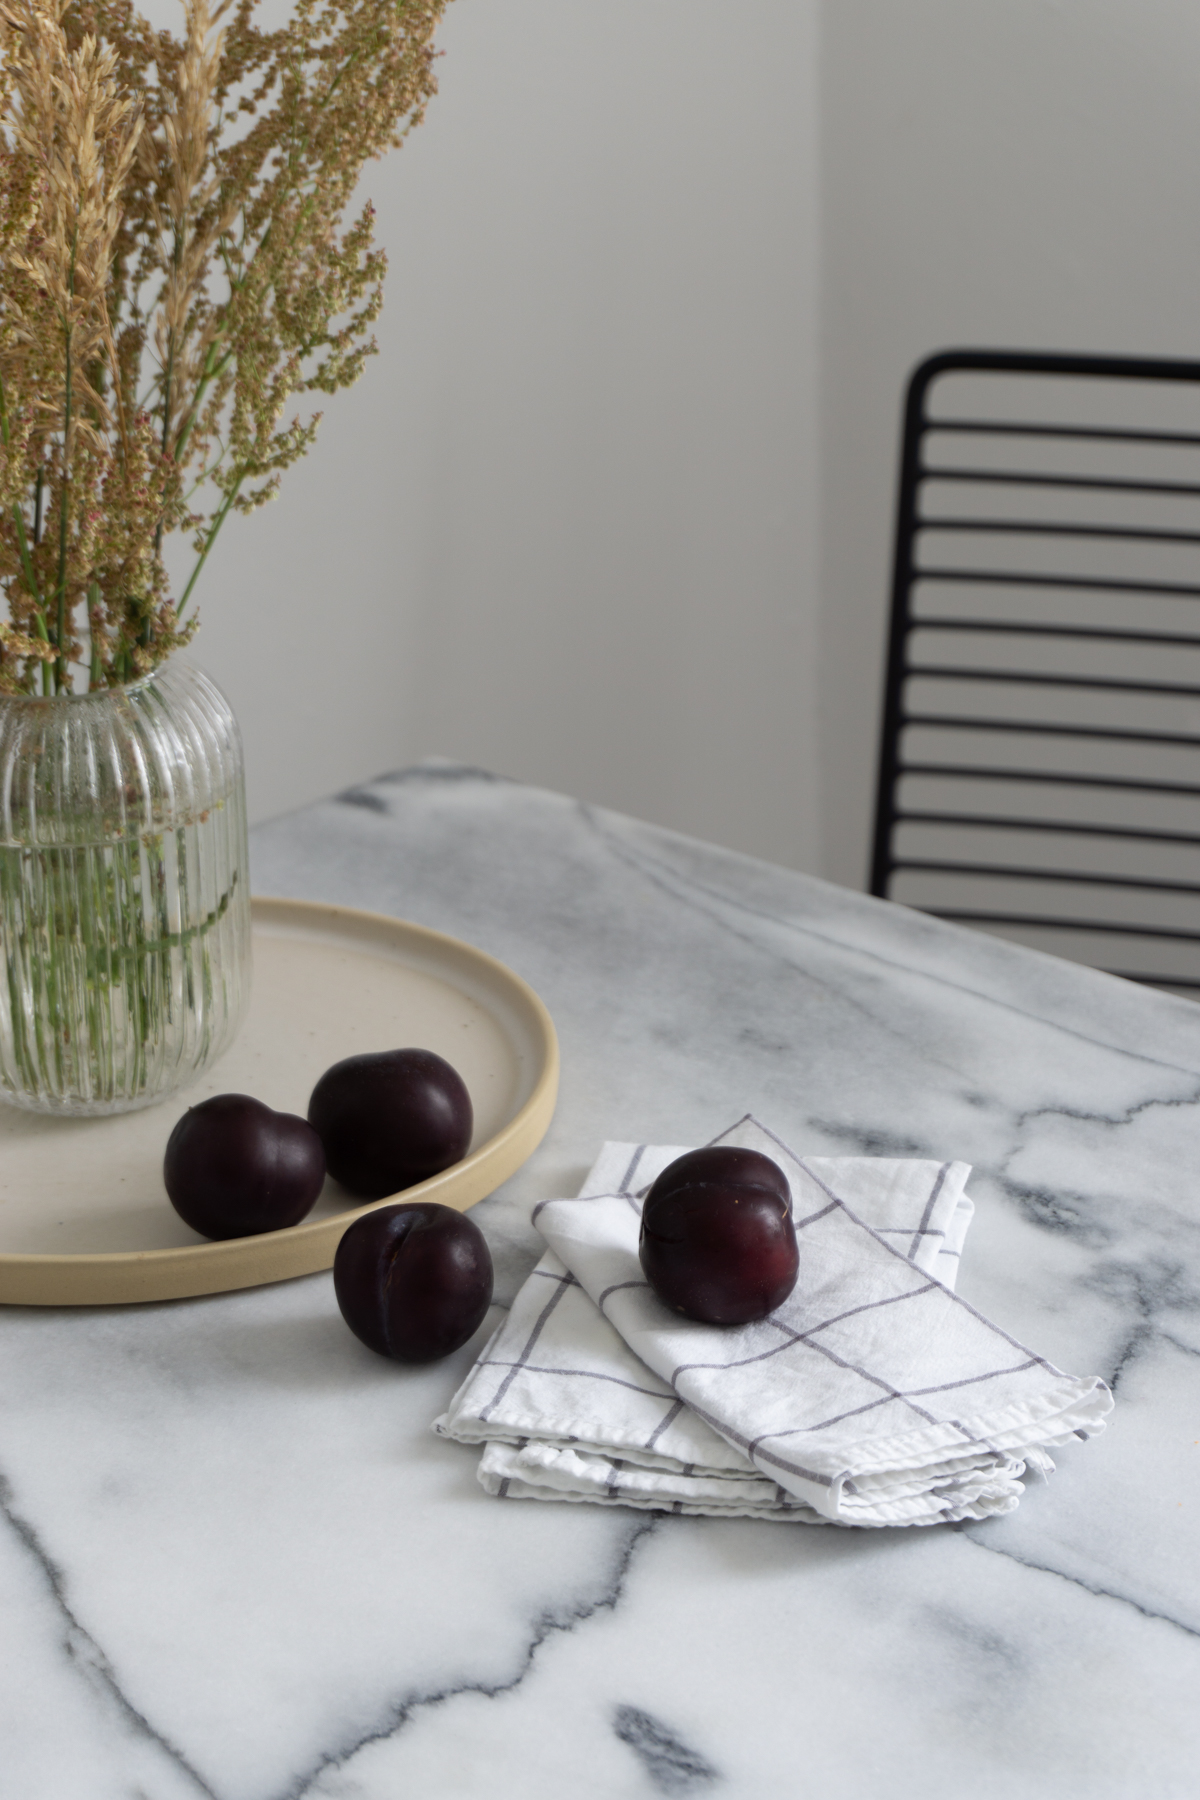 White and Beige Danish Inspired Kitchen | Alva Concept Ceramics, Plums, Marble Kitchen Table, Wheat Arrangement - RG Daily Blog, Interior Design